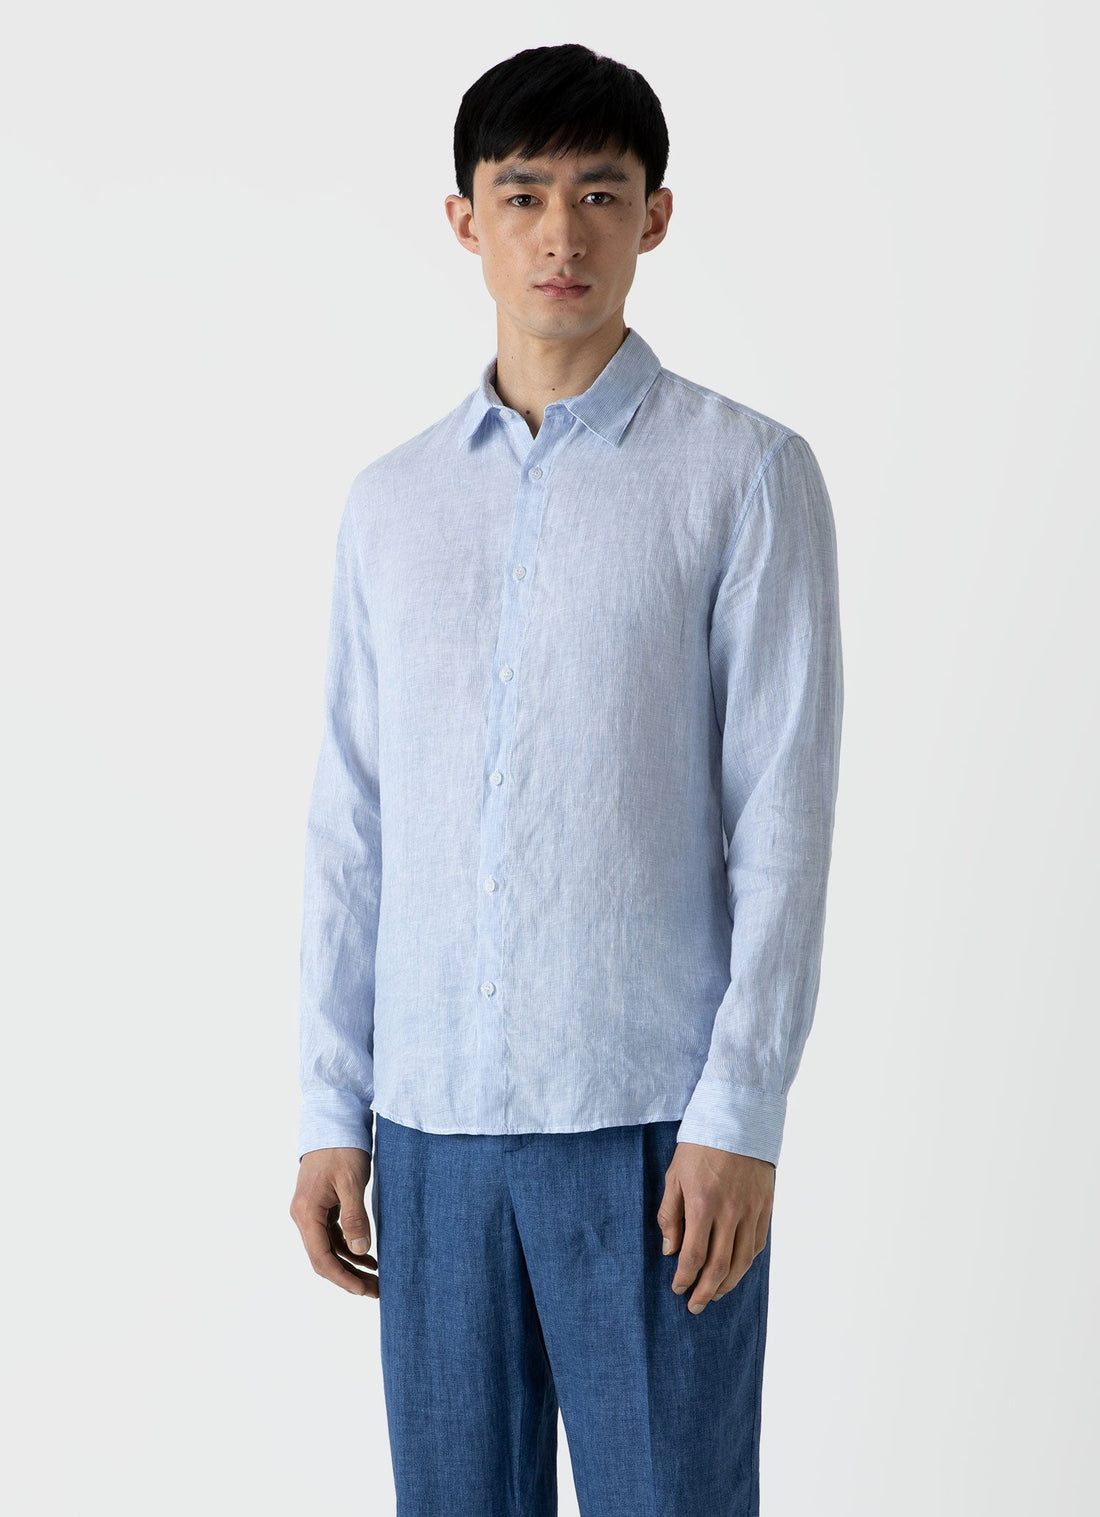 Men's Linen Long Sleeve Shirt in Cool Blue Micro Stripe